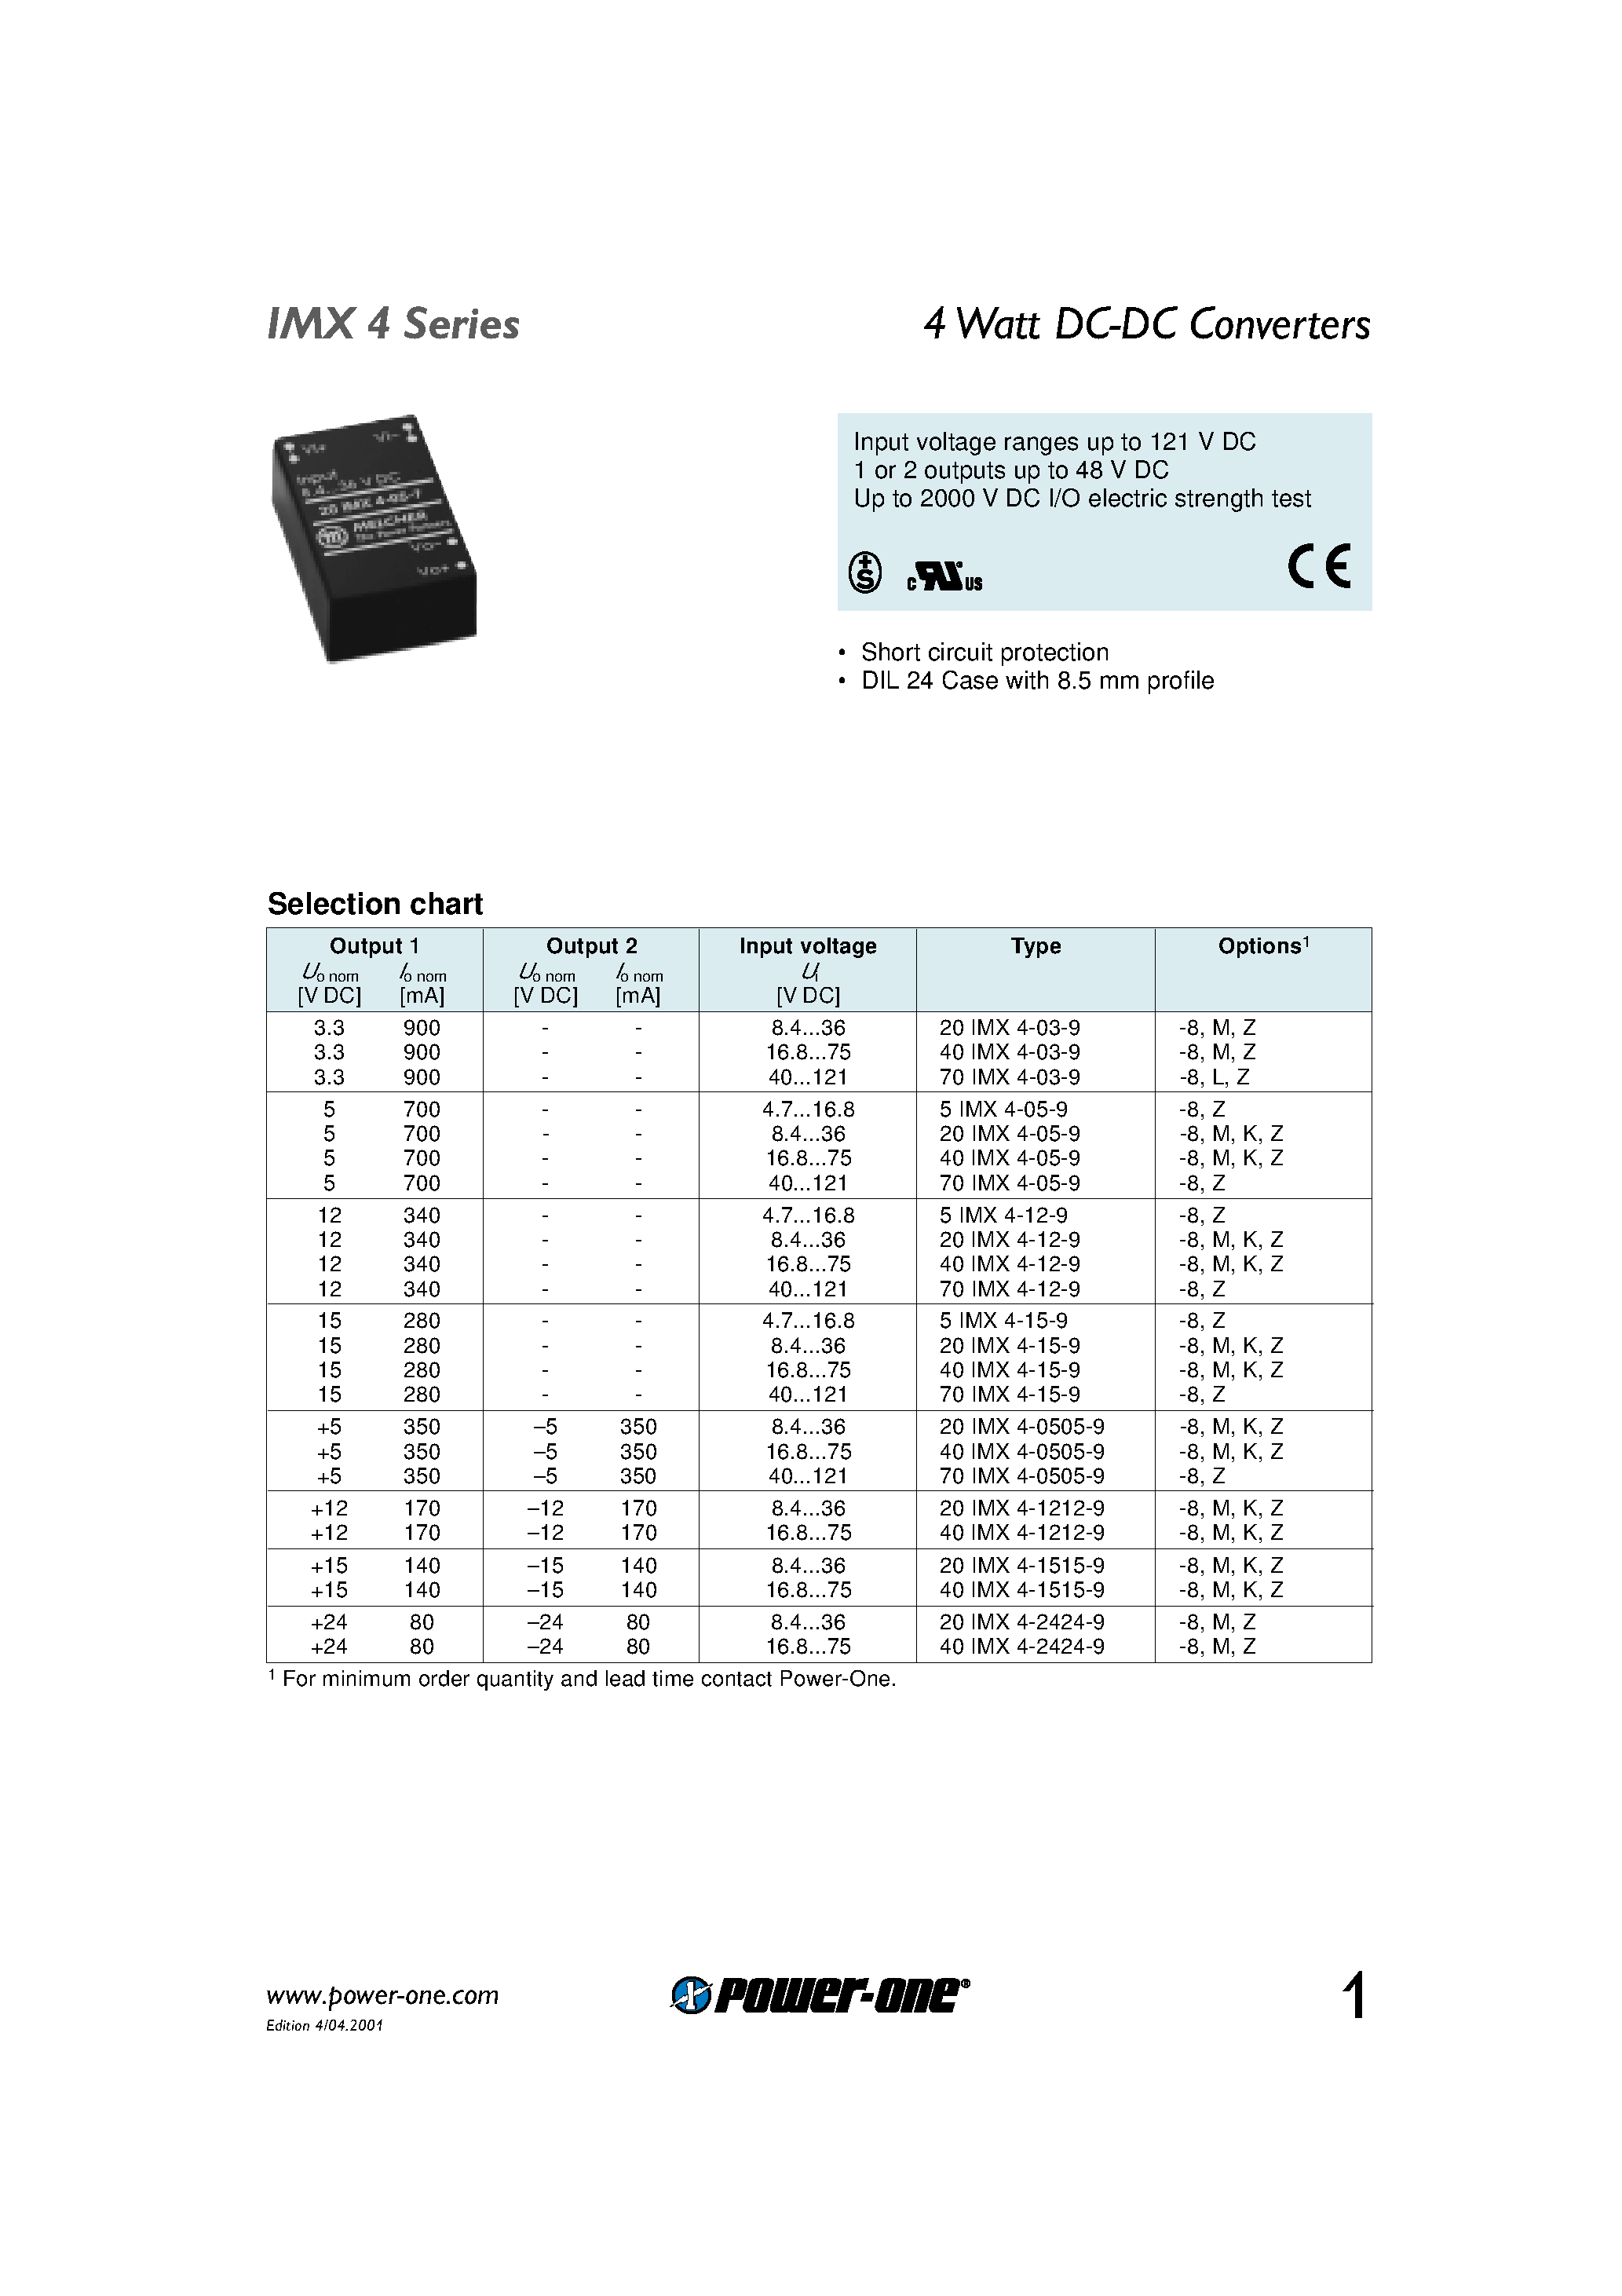 Datasheet 5IMX4-12-9 - 4 Watt DC-DC Converters page 1